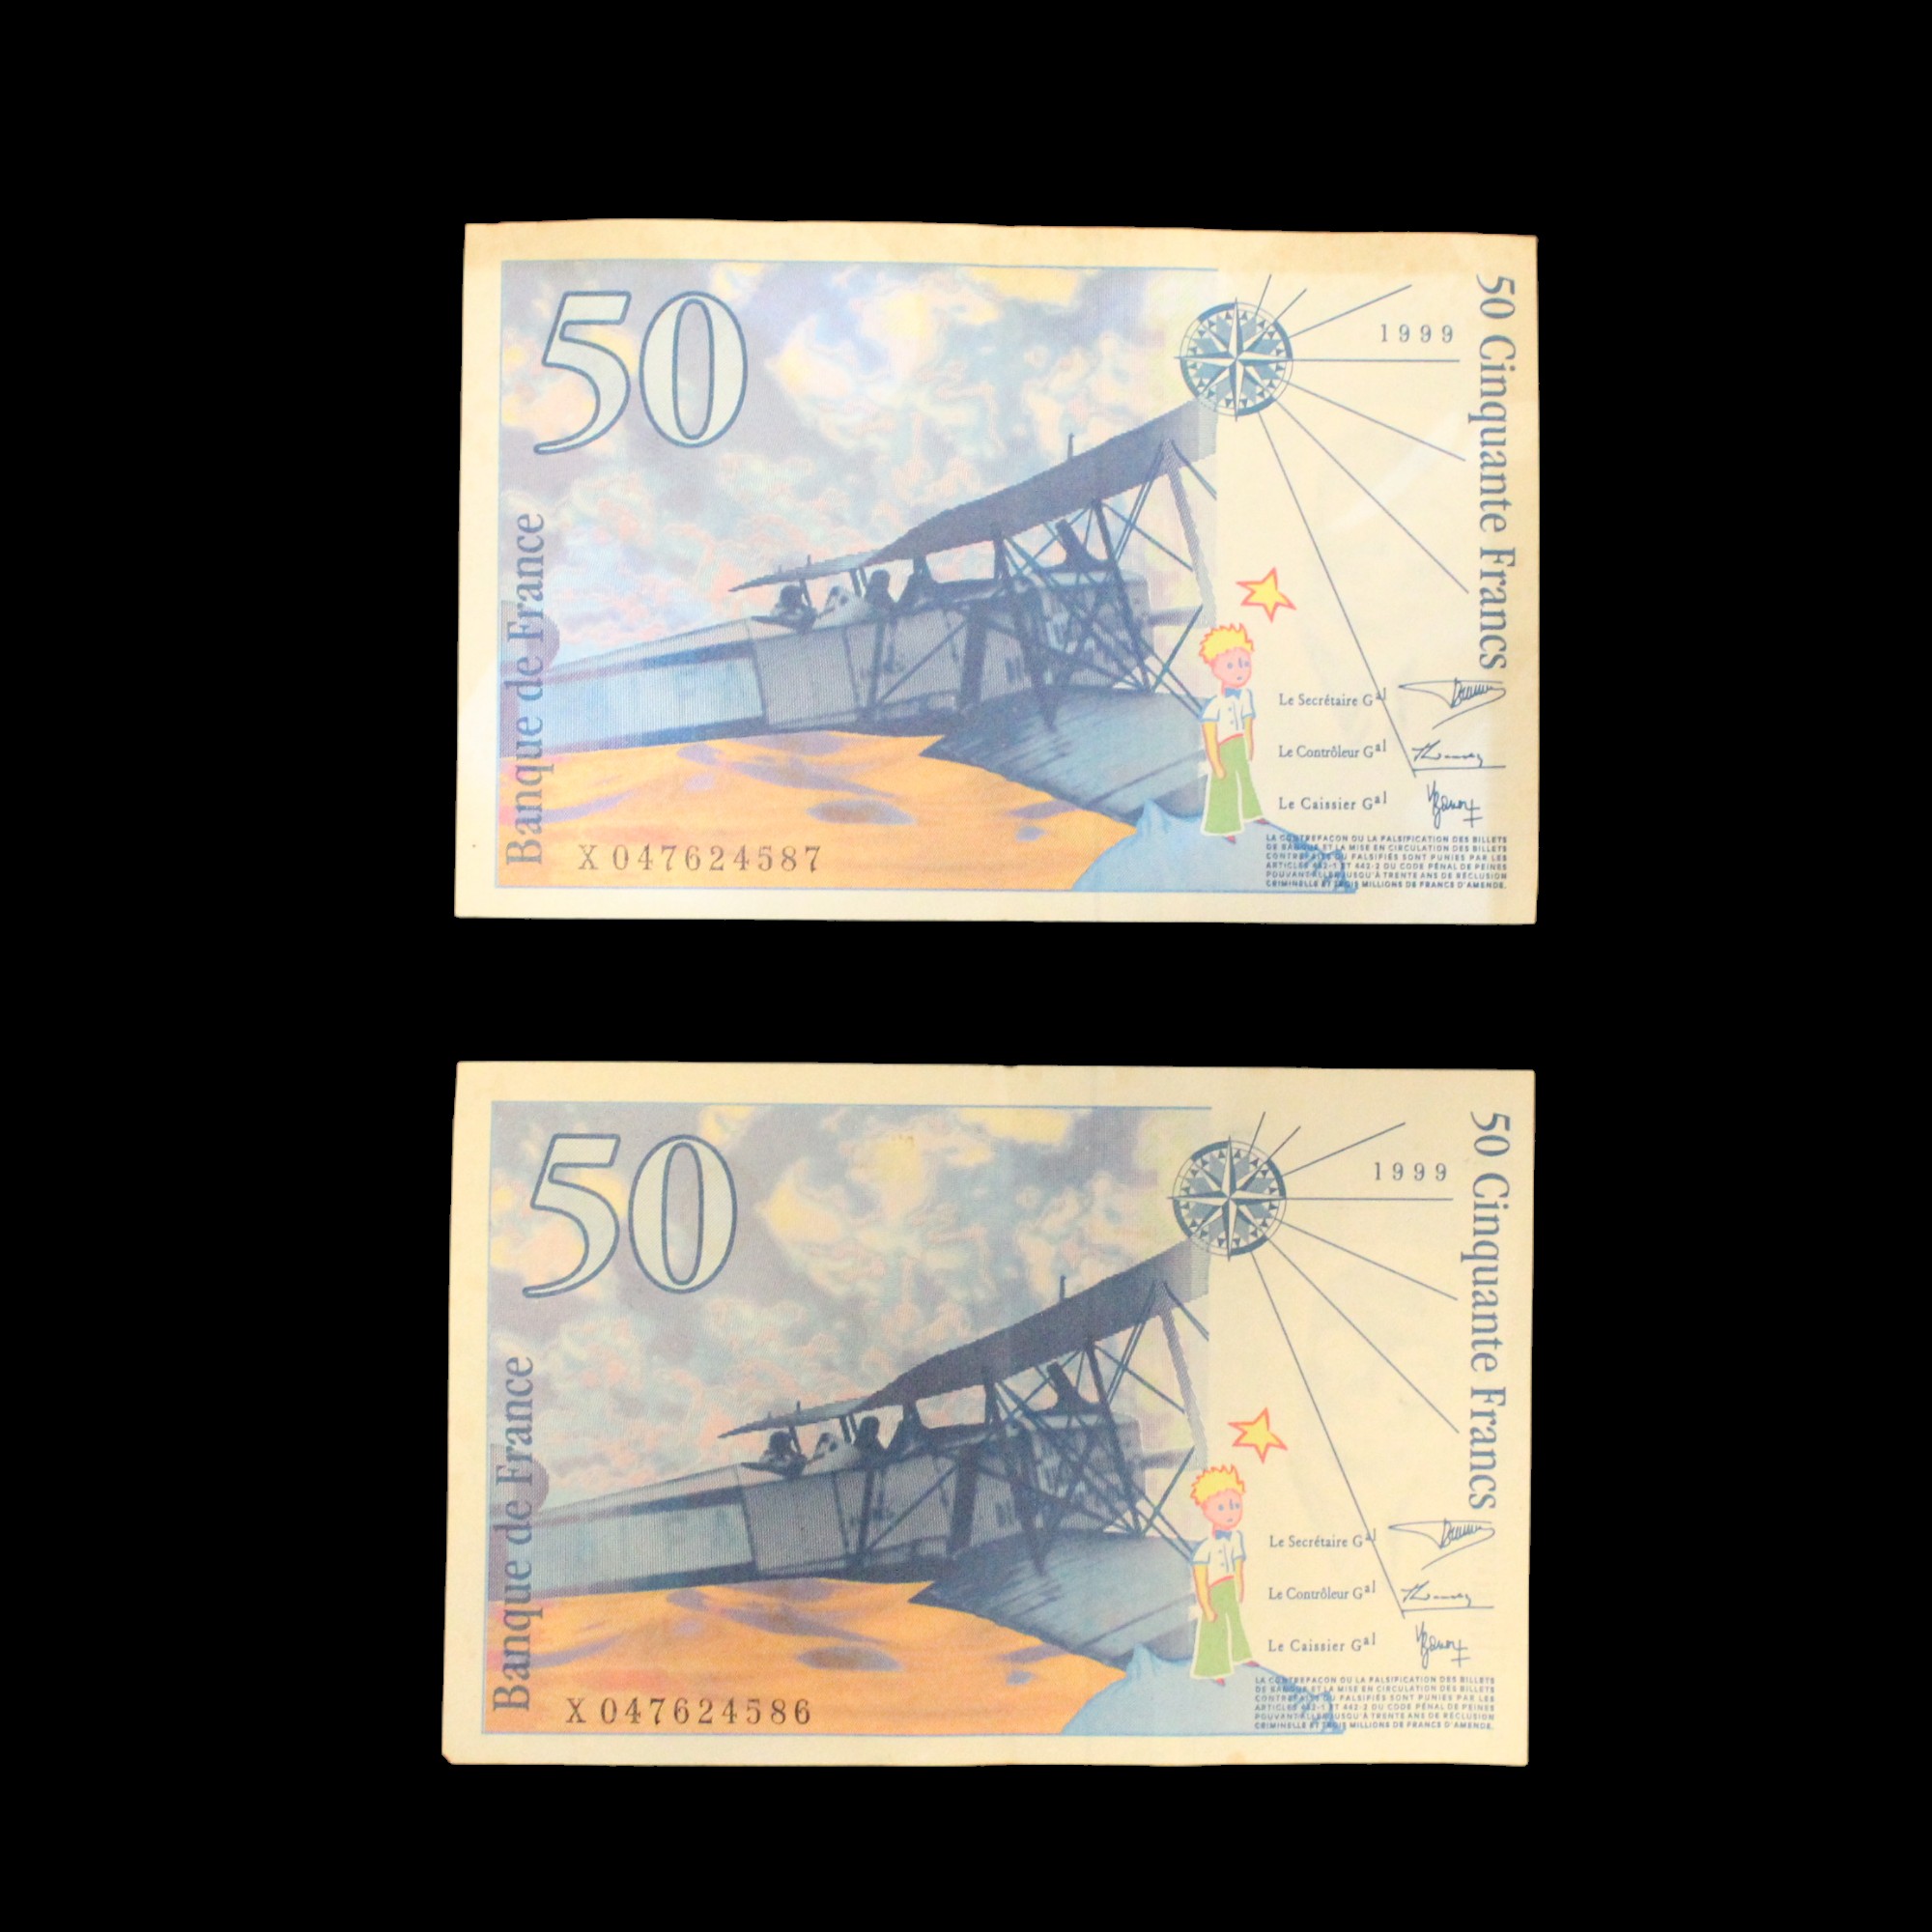 Two Banque de France 1999 50 Francs Saint-Exupéry type 1992 modified banknotes - Image 2 of 2